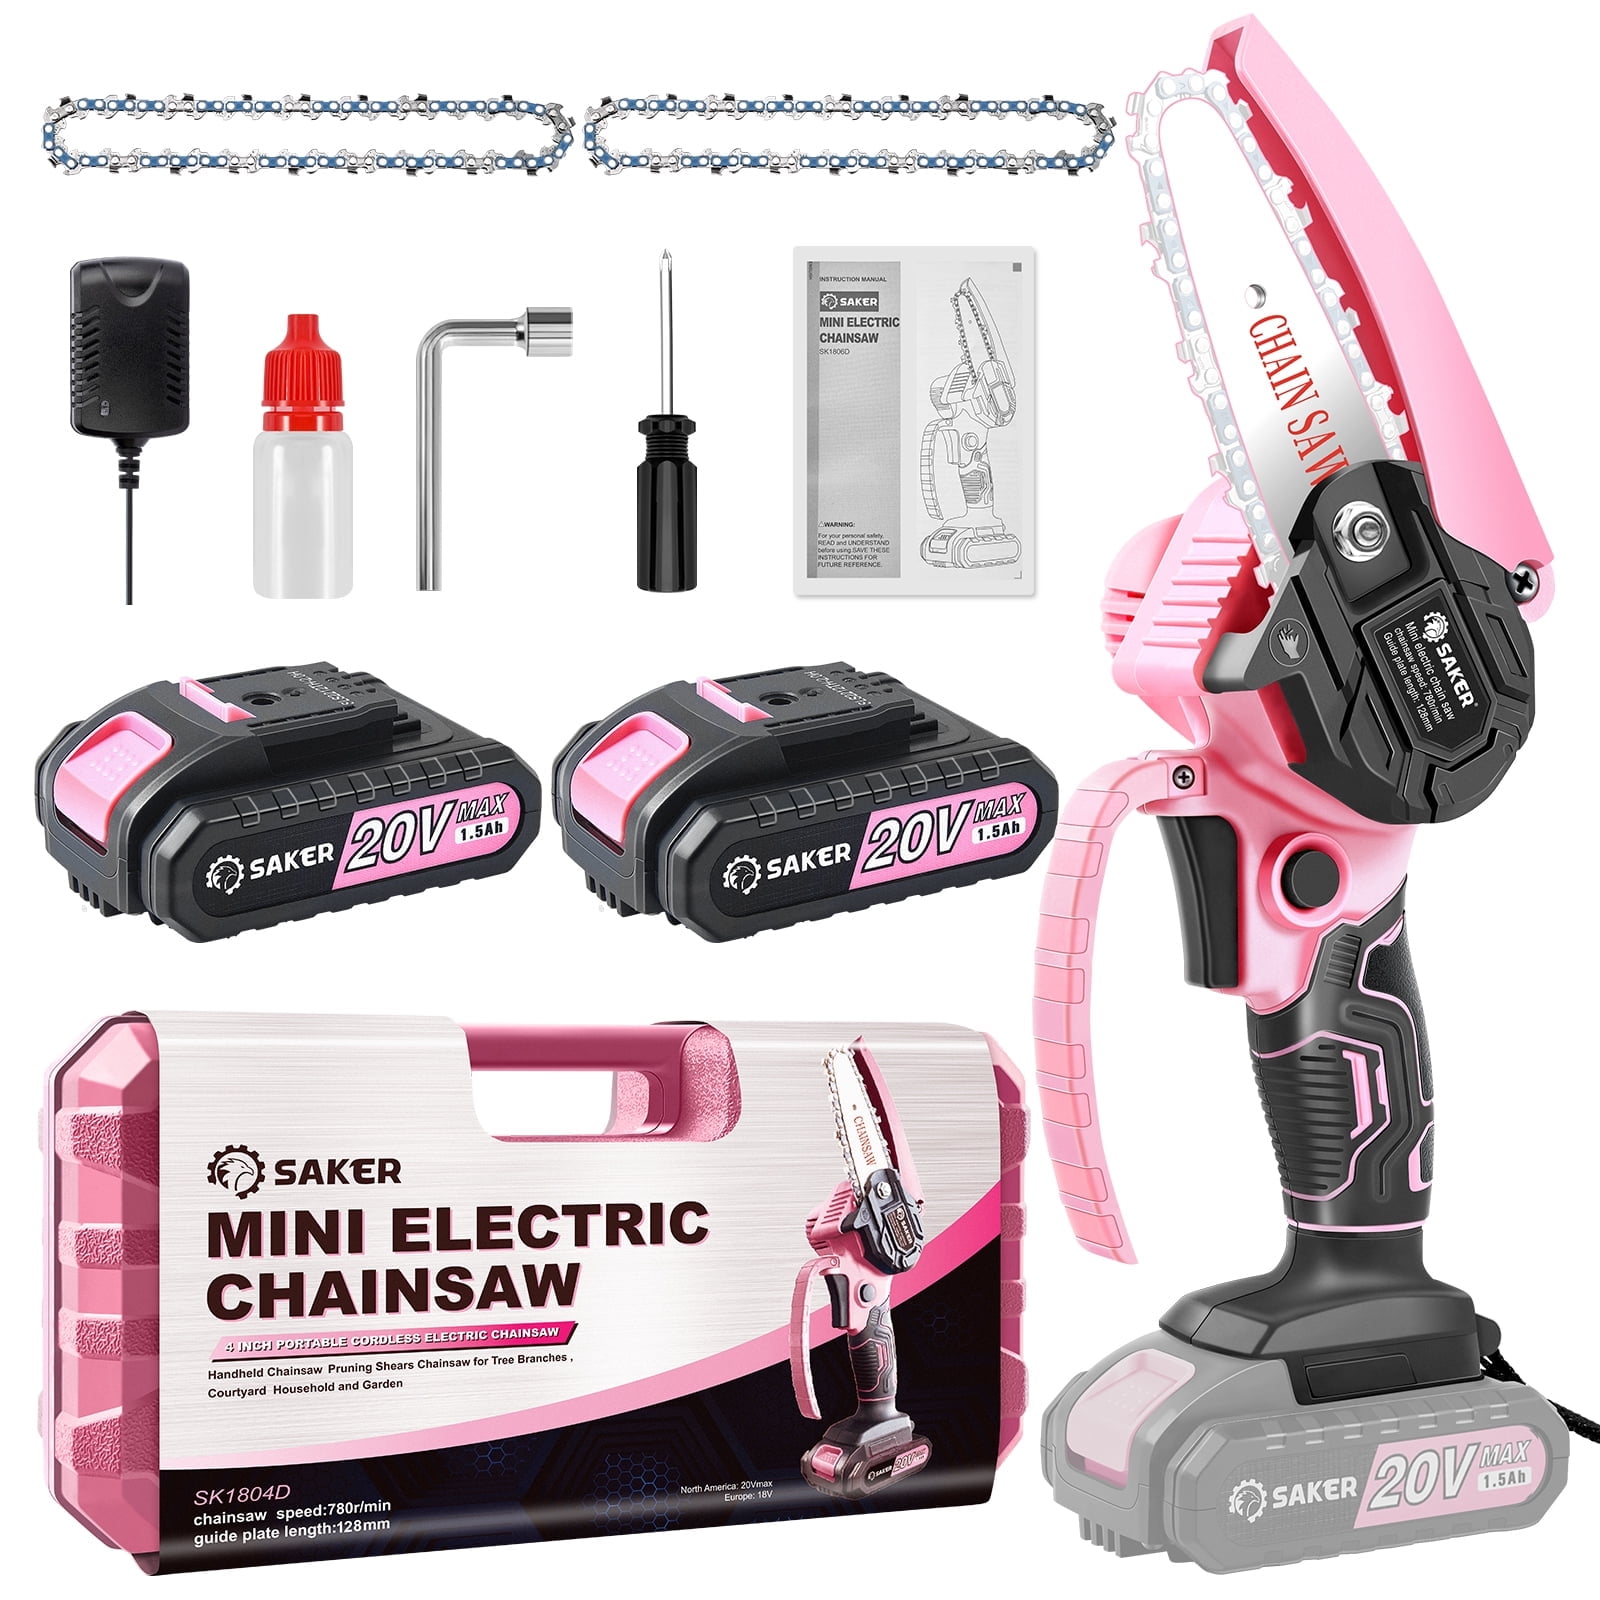 Trail Tools: Electric Chainsaw Vs. Electric Sawzall - Pinkbike